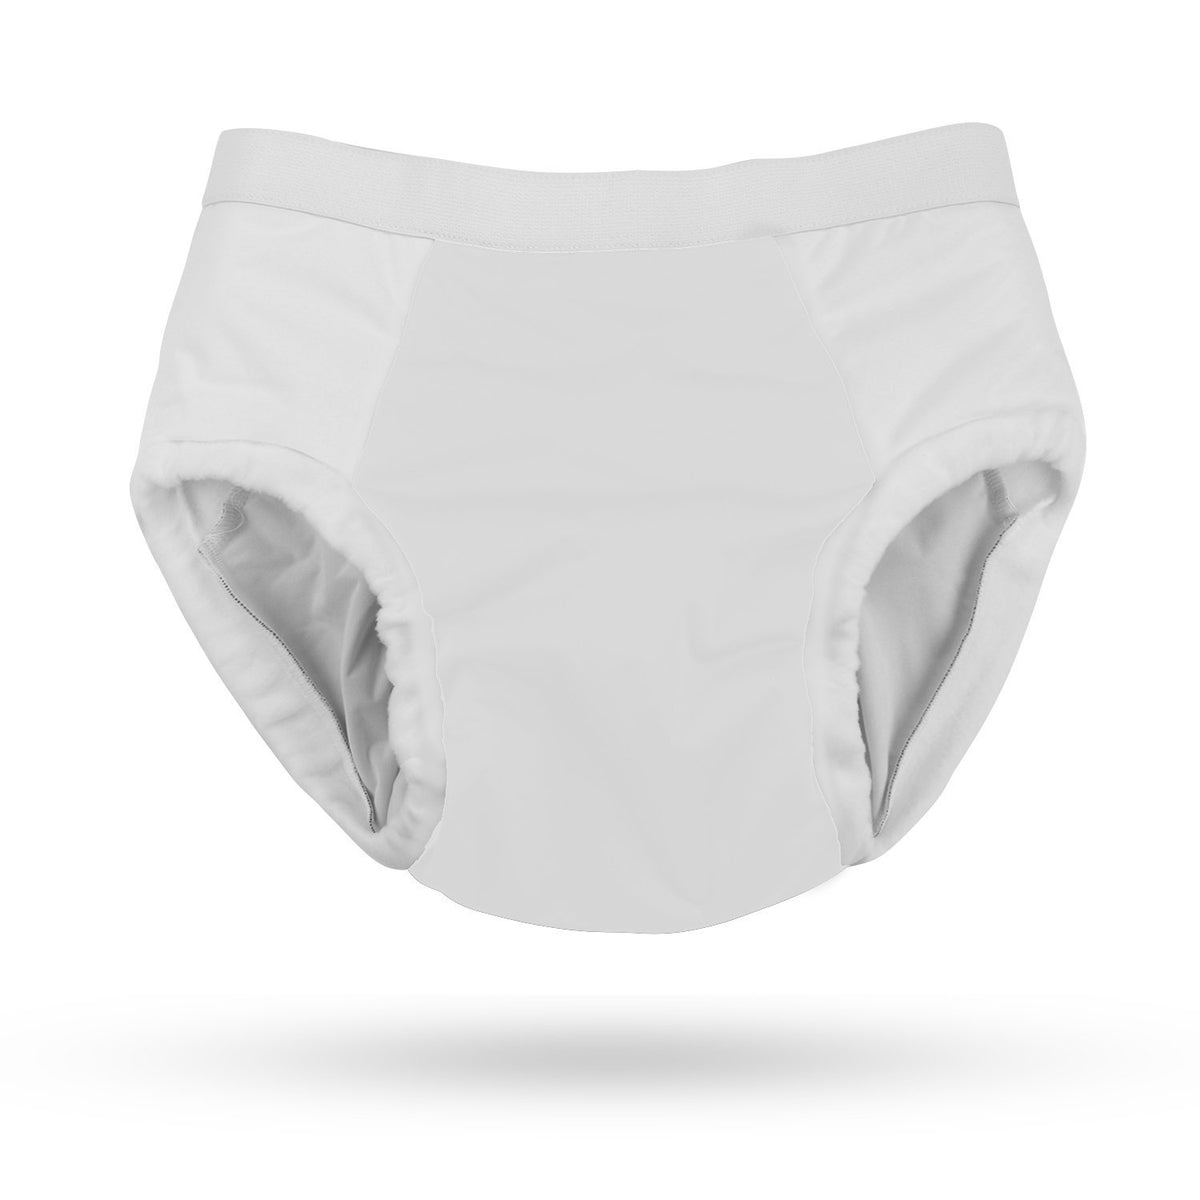 Men's HOM Underwear UK, Save 20% on Subscription